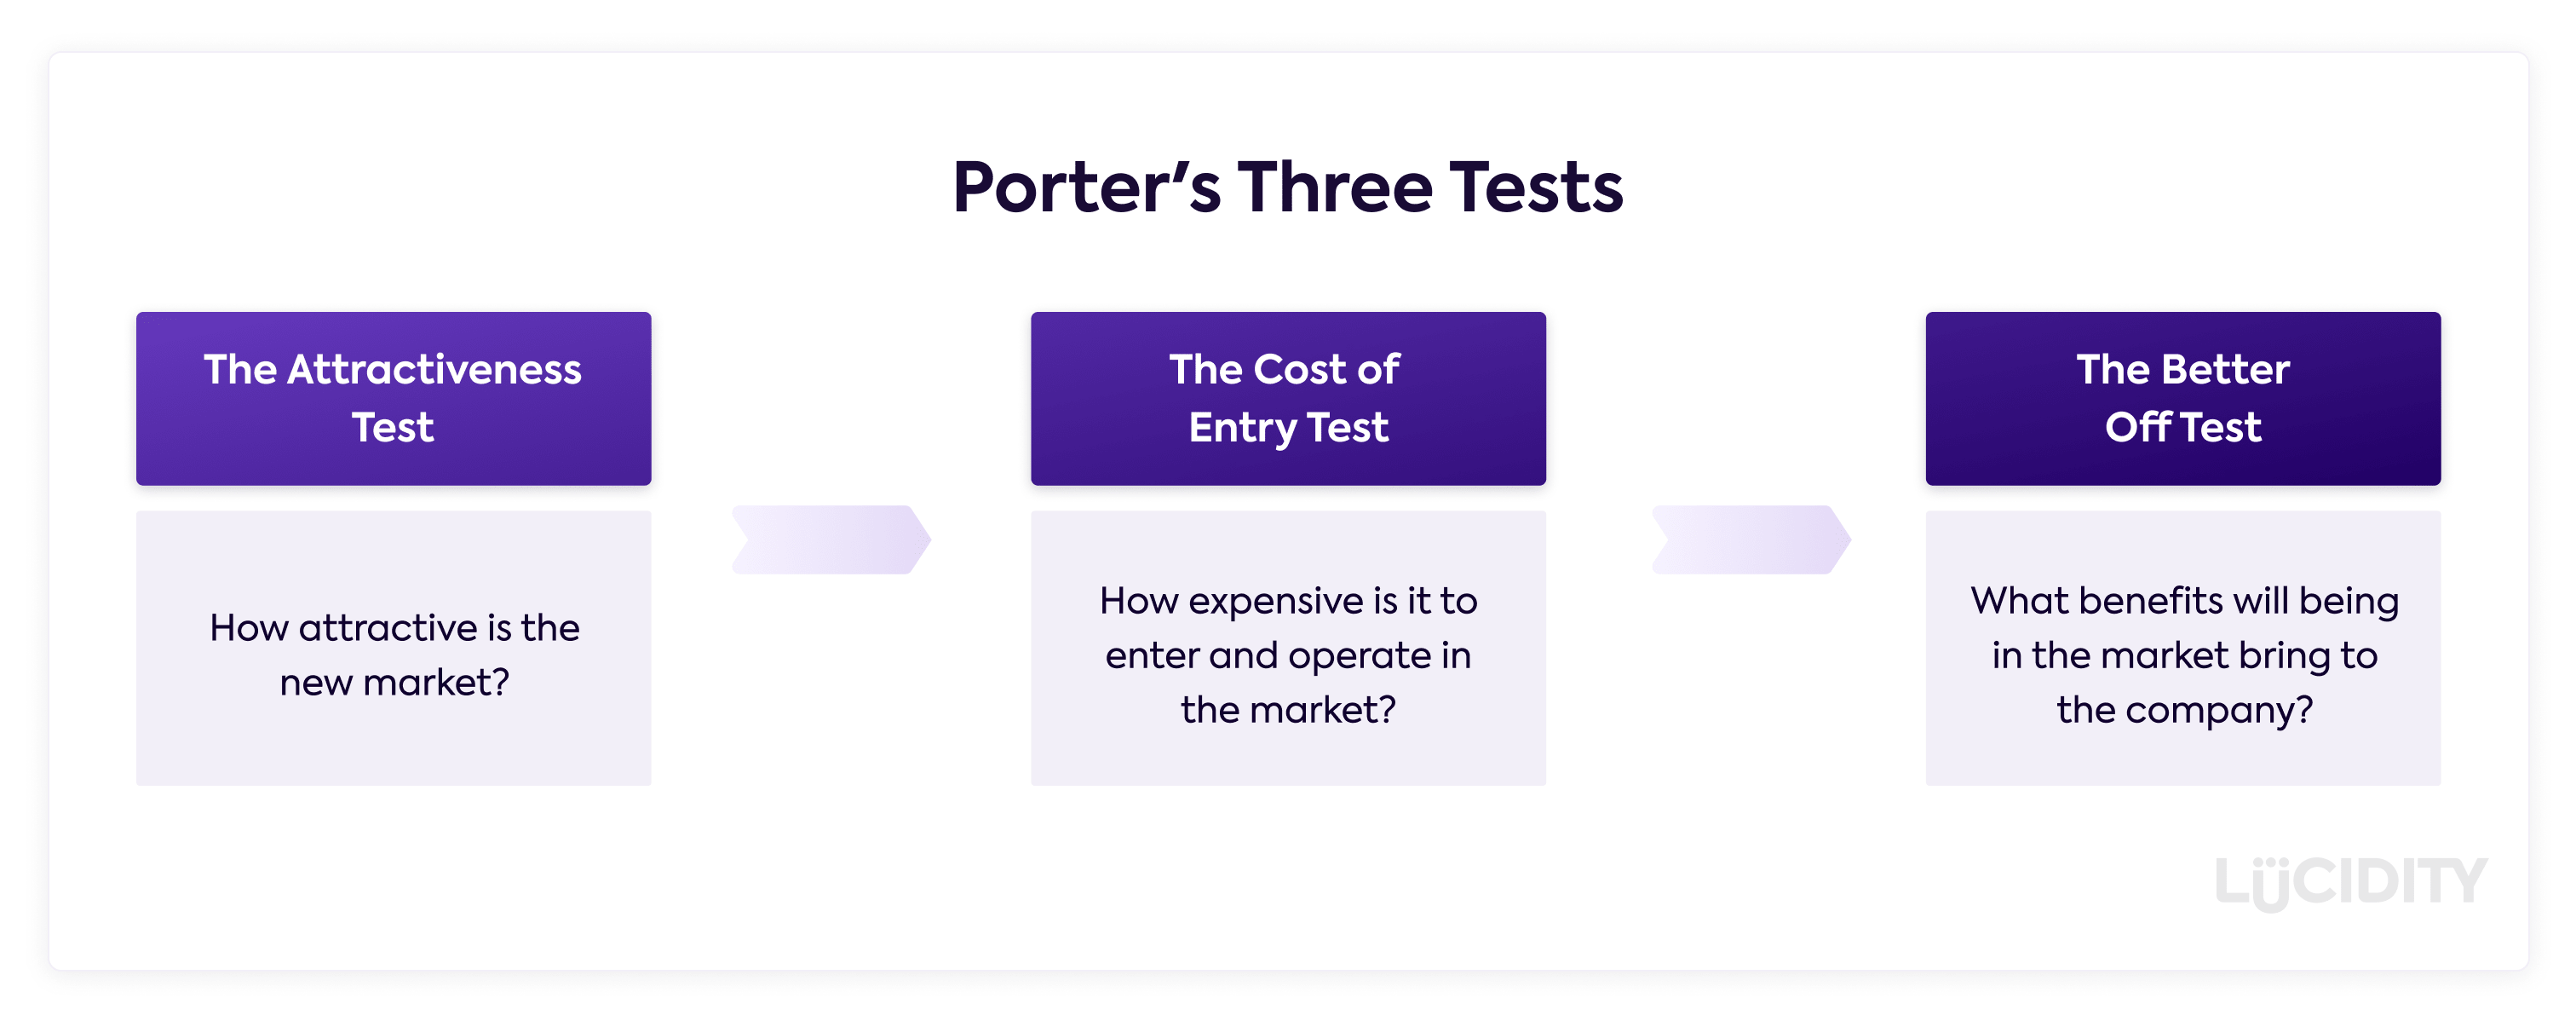 Porter's Three Tests